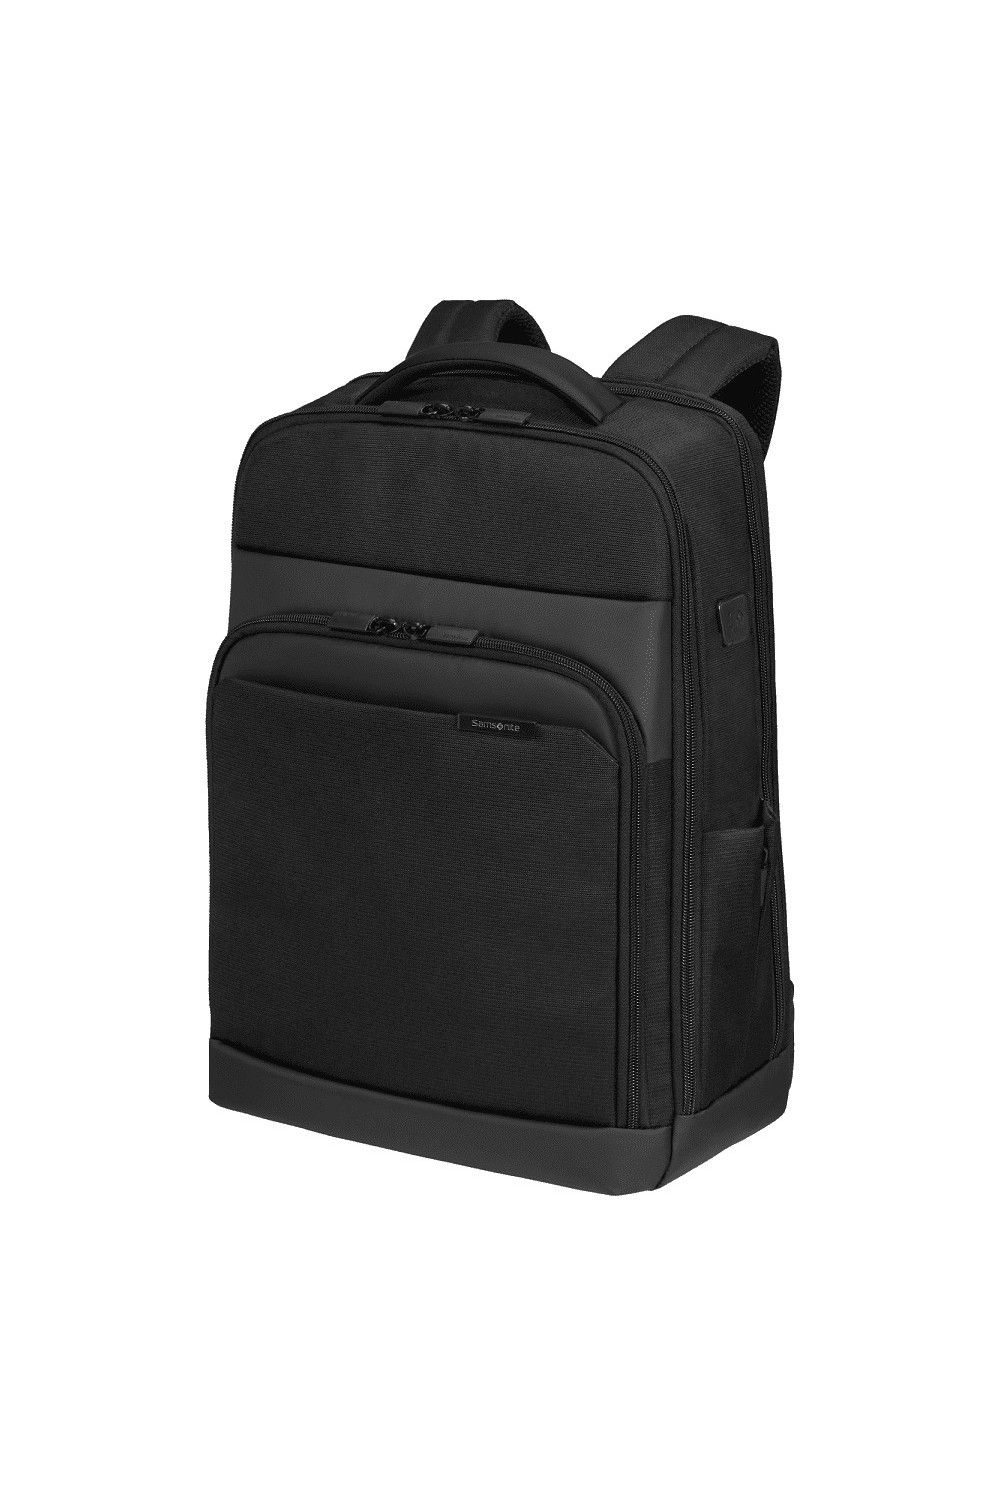 Samsonite Mysight laptop backpack 17.3 inches